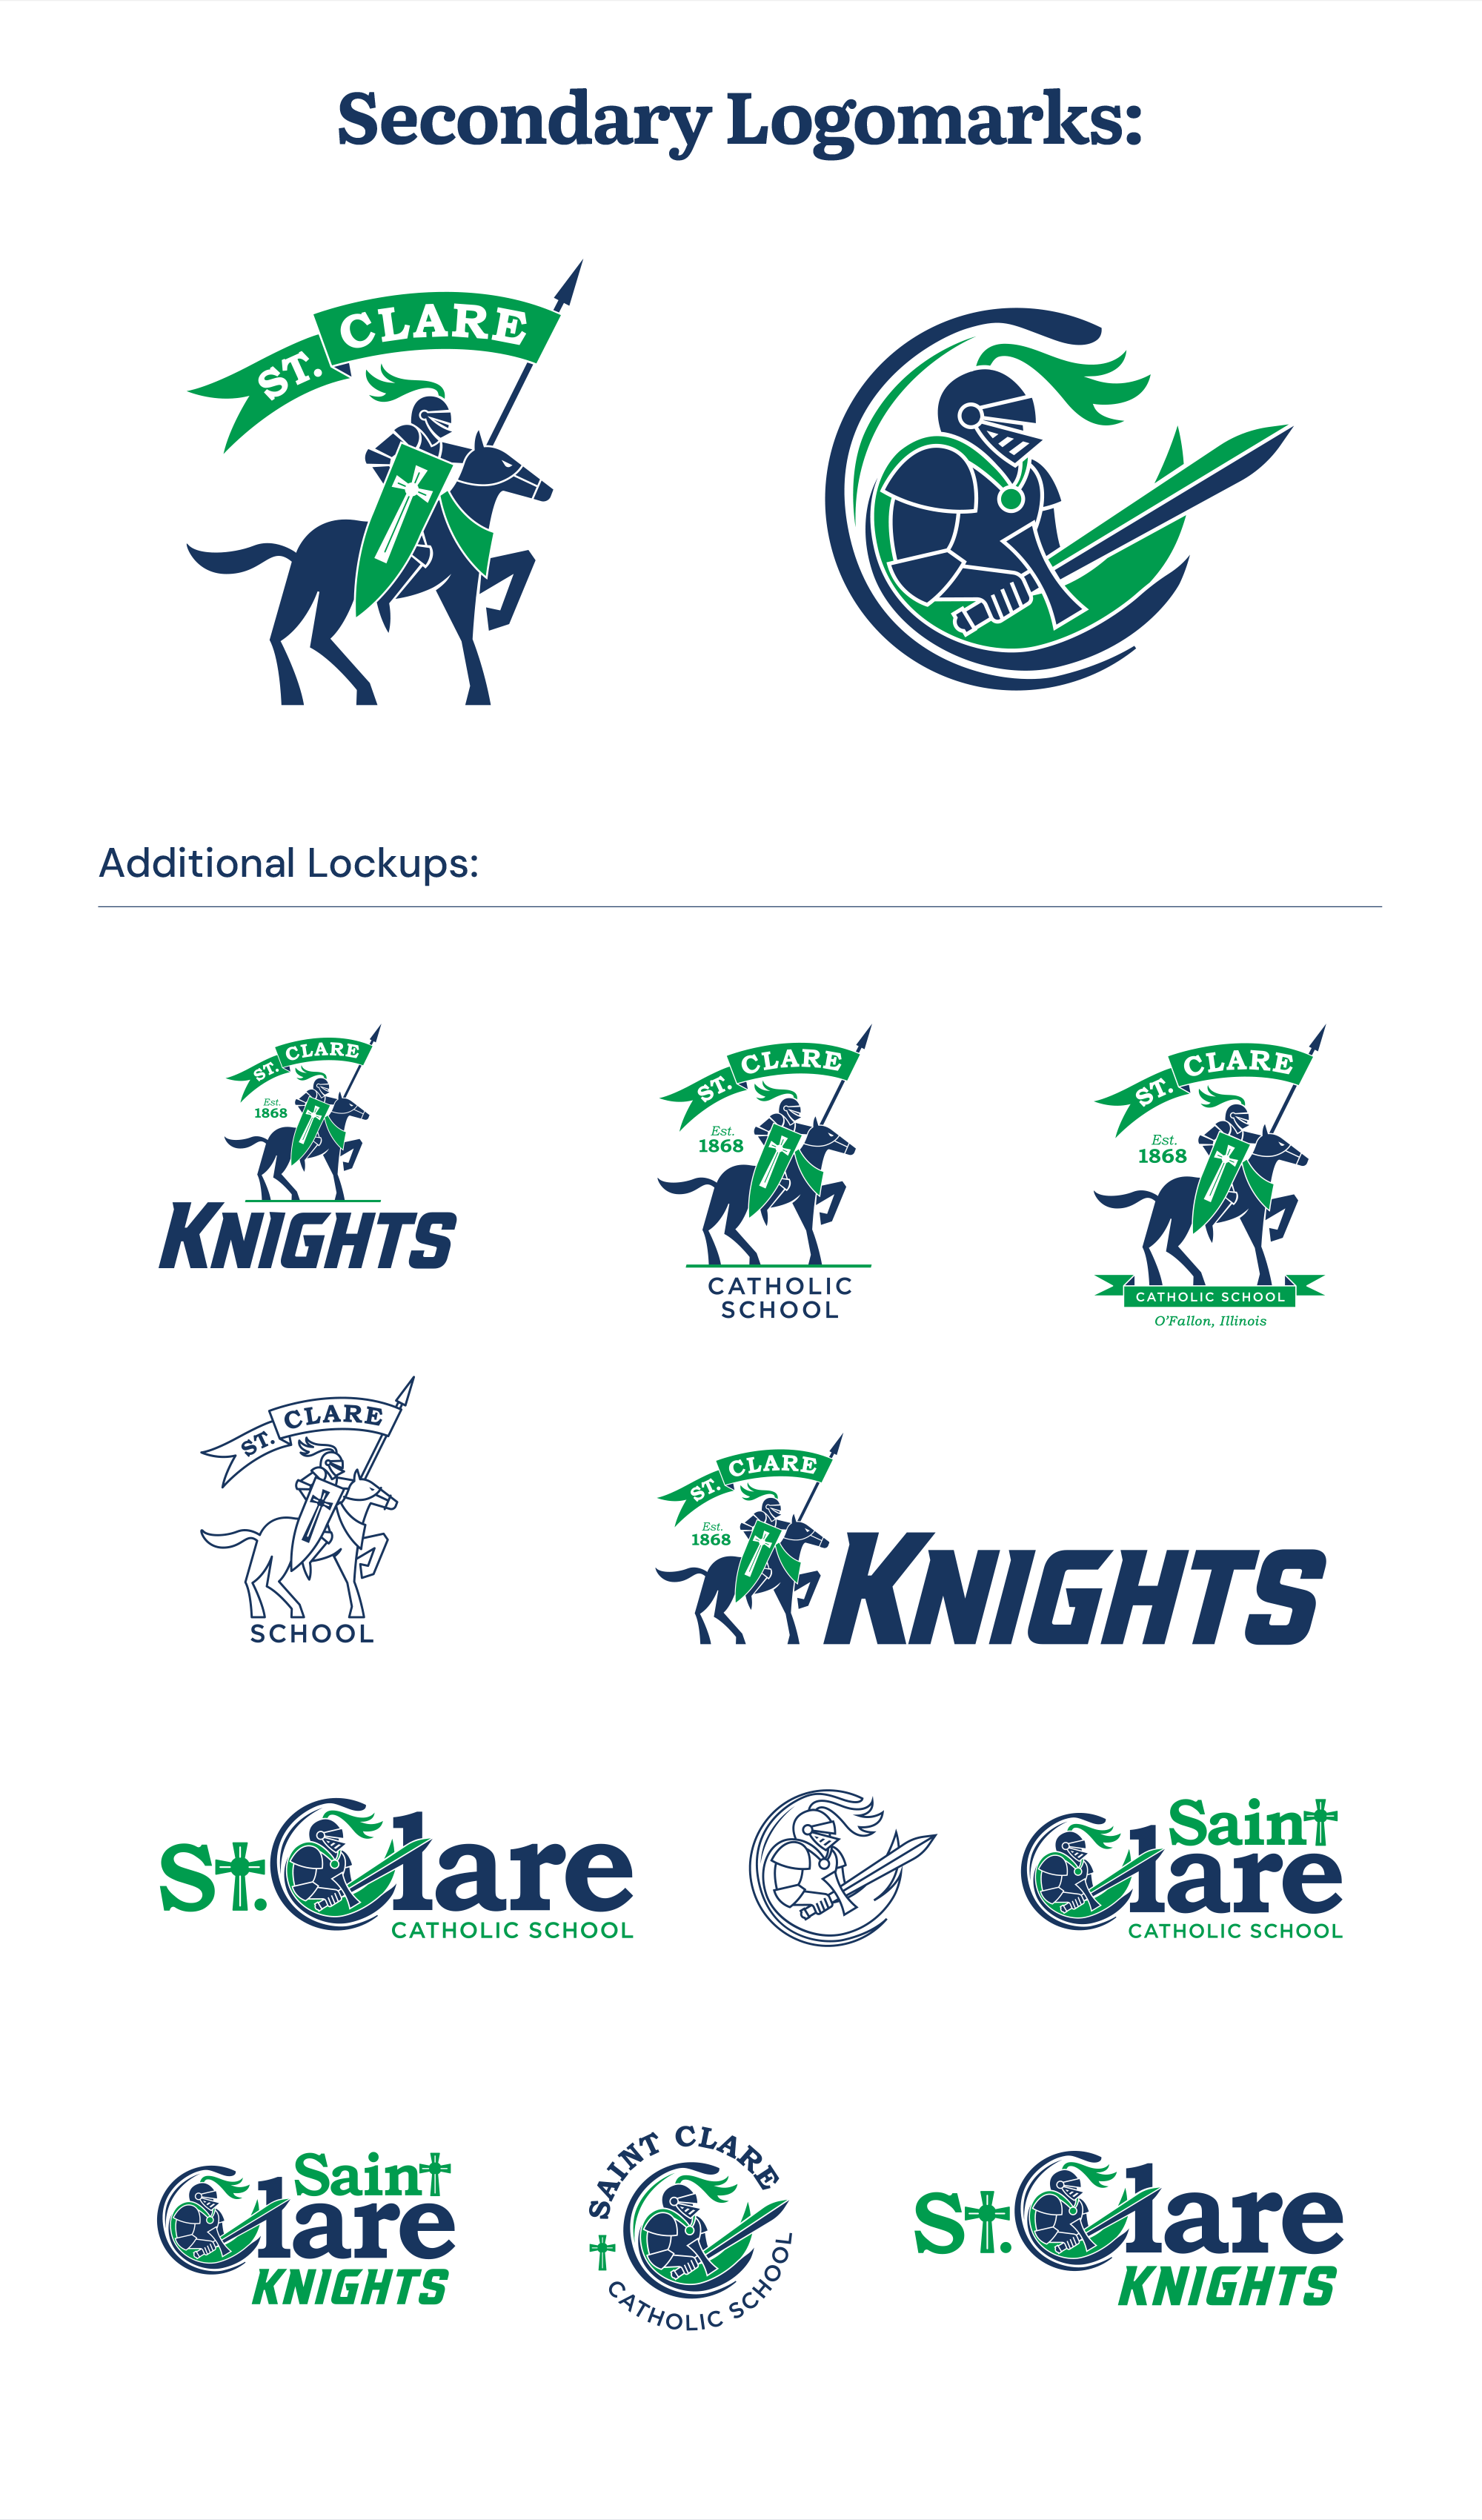 StC secondary logomarks